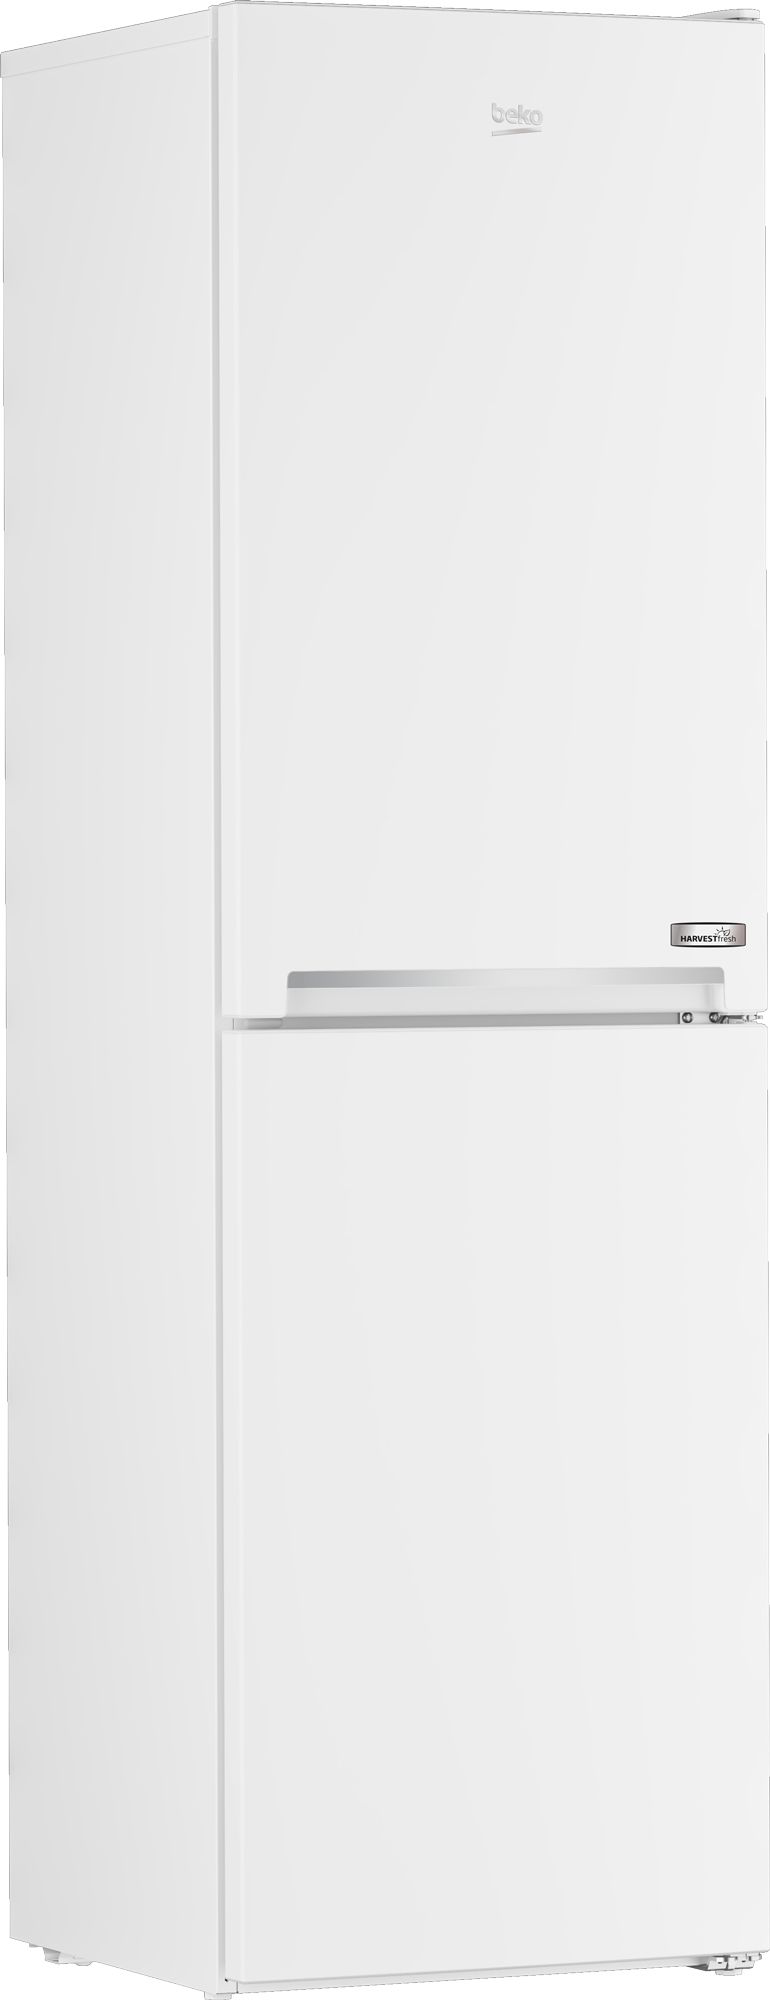 Bosch Fridge Freezer | White | KIN86NSE0G | ao.com